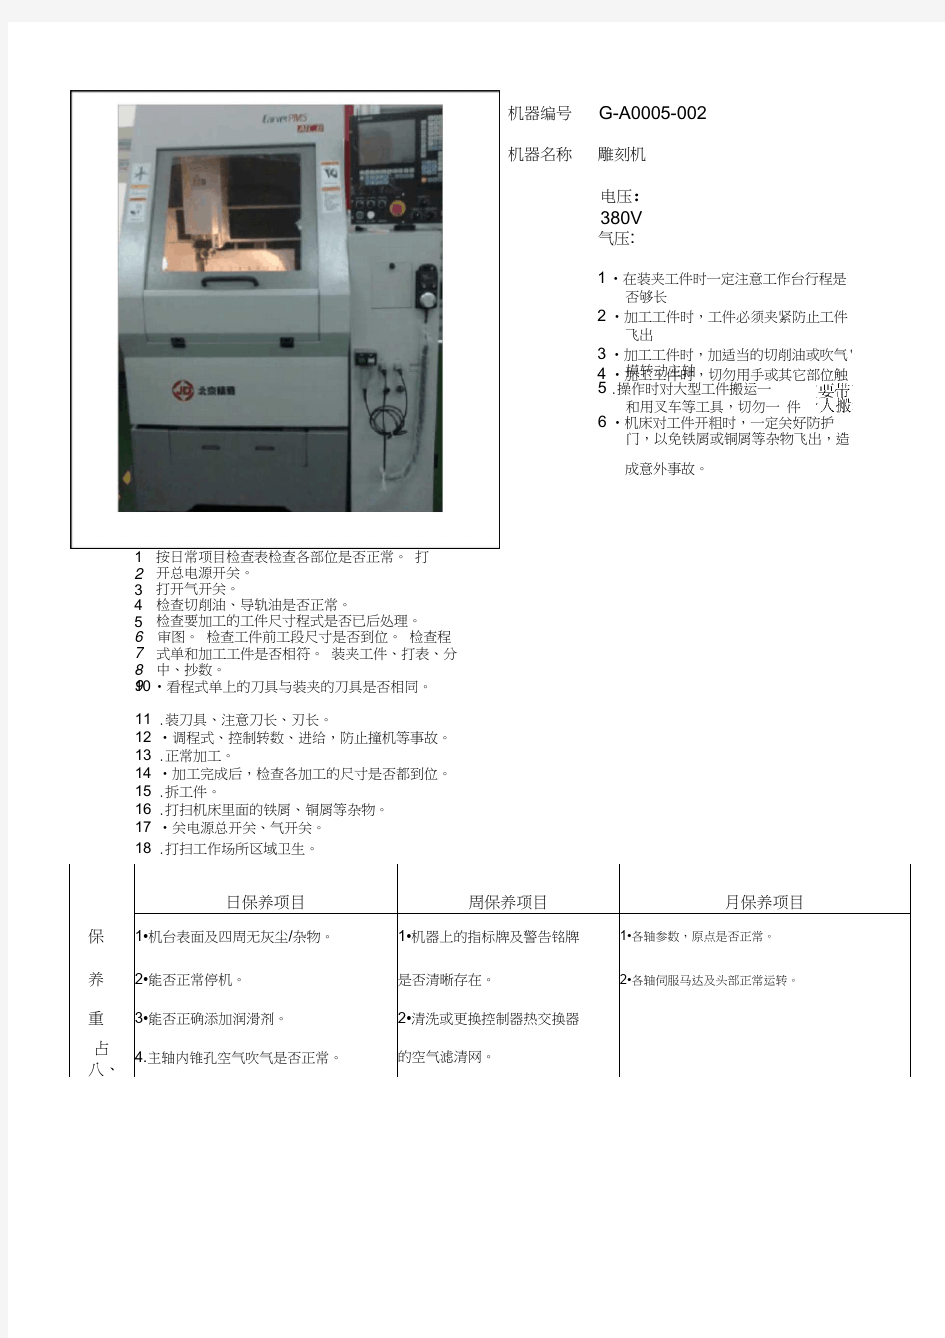 cnc-MD-40-014.A北京精雕雕刻机设备操作说明书